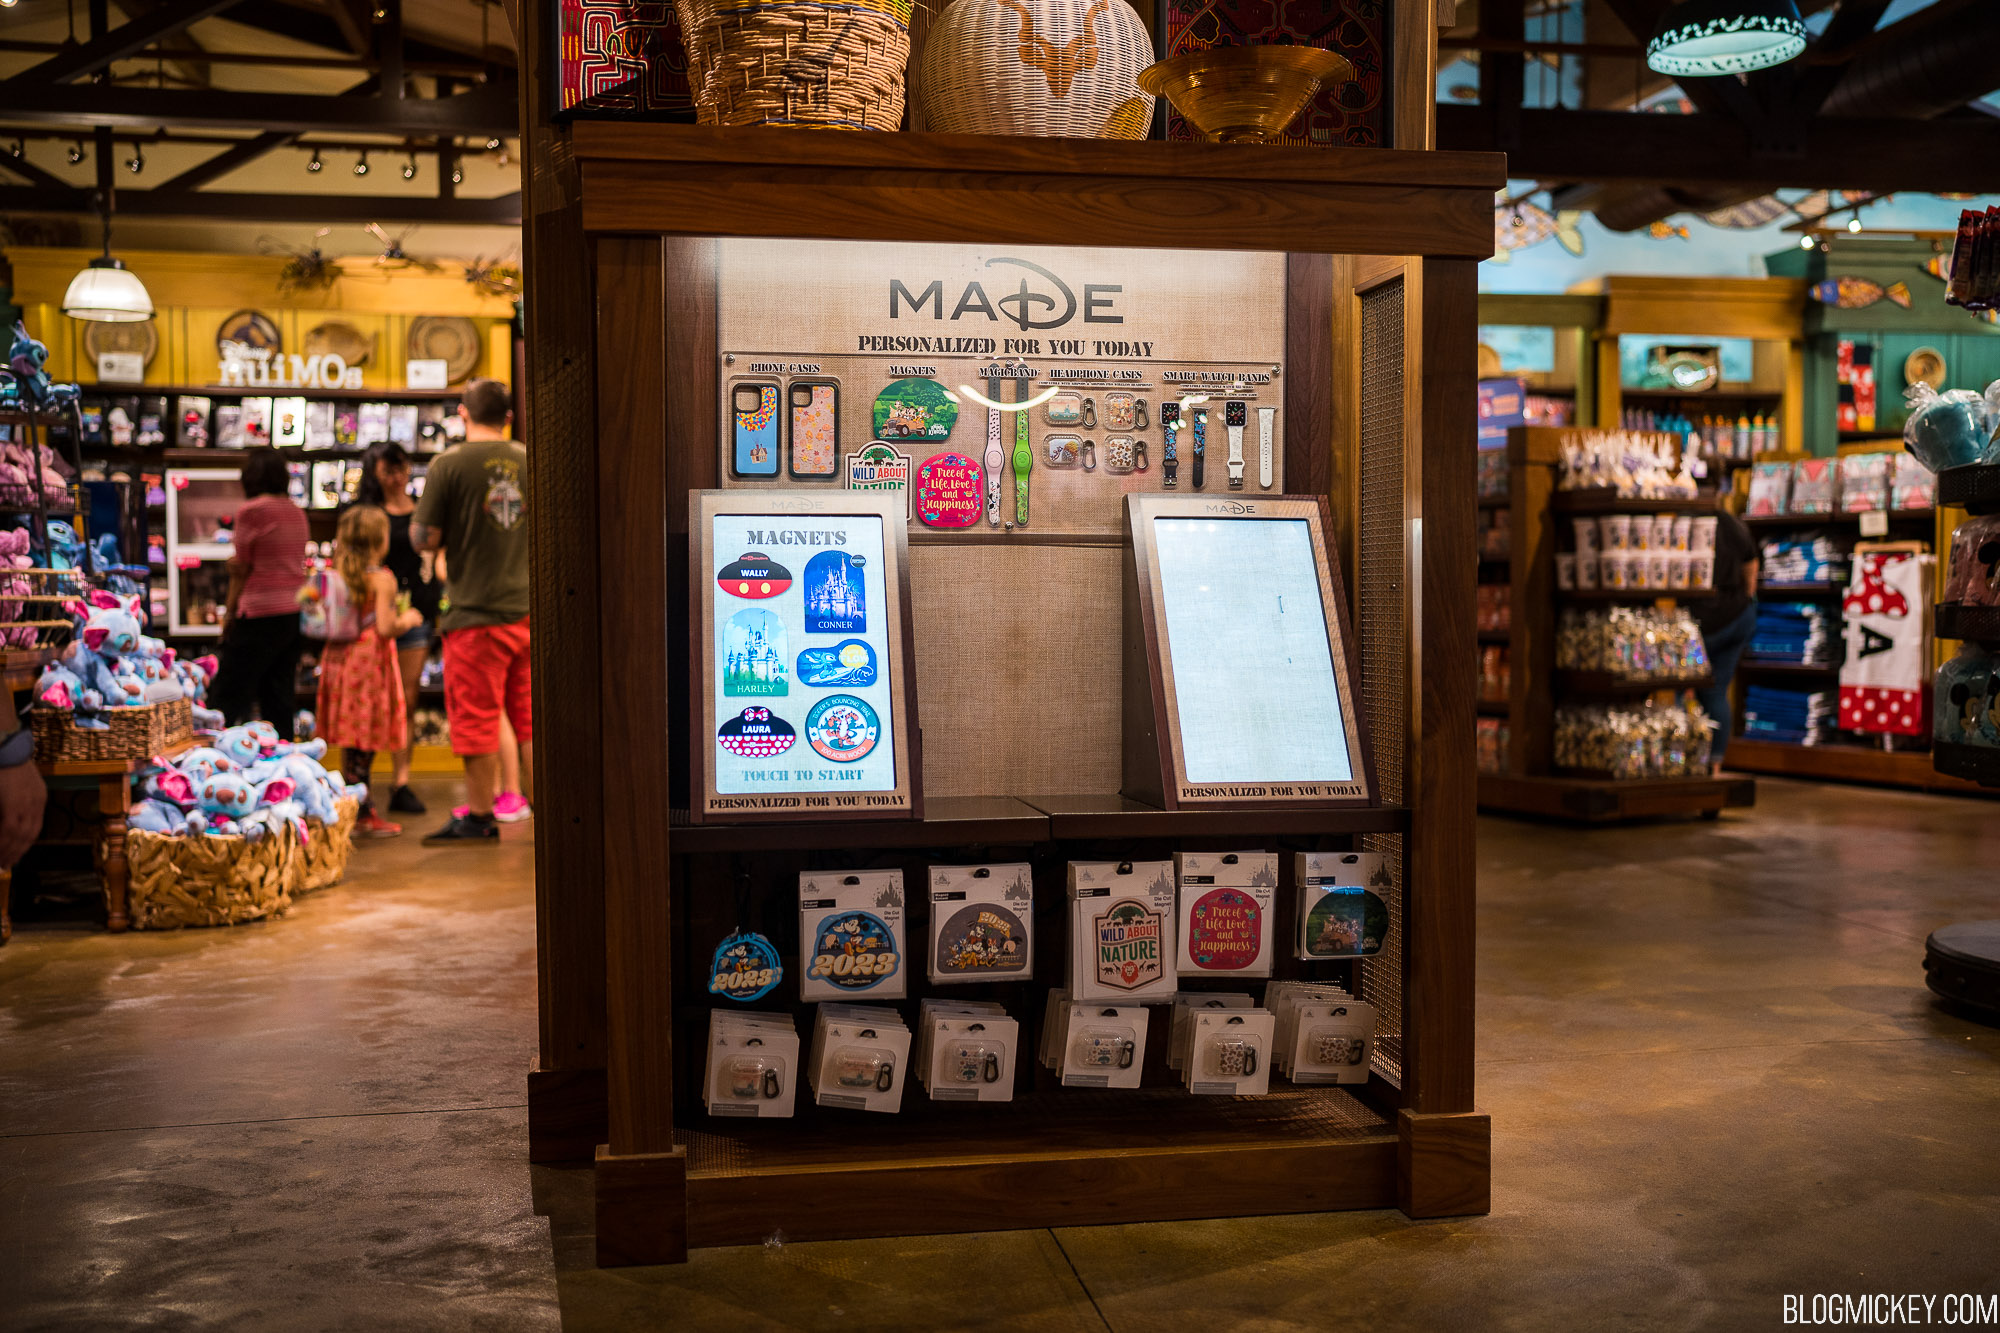 New MADE Merchandise Personalization Kiosk Debuts in Disney's Animal Kingdom